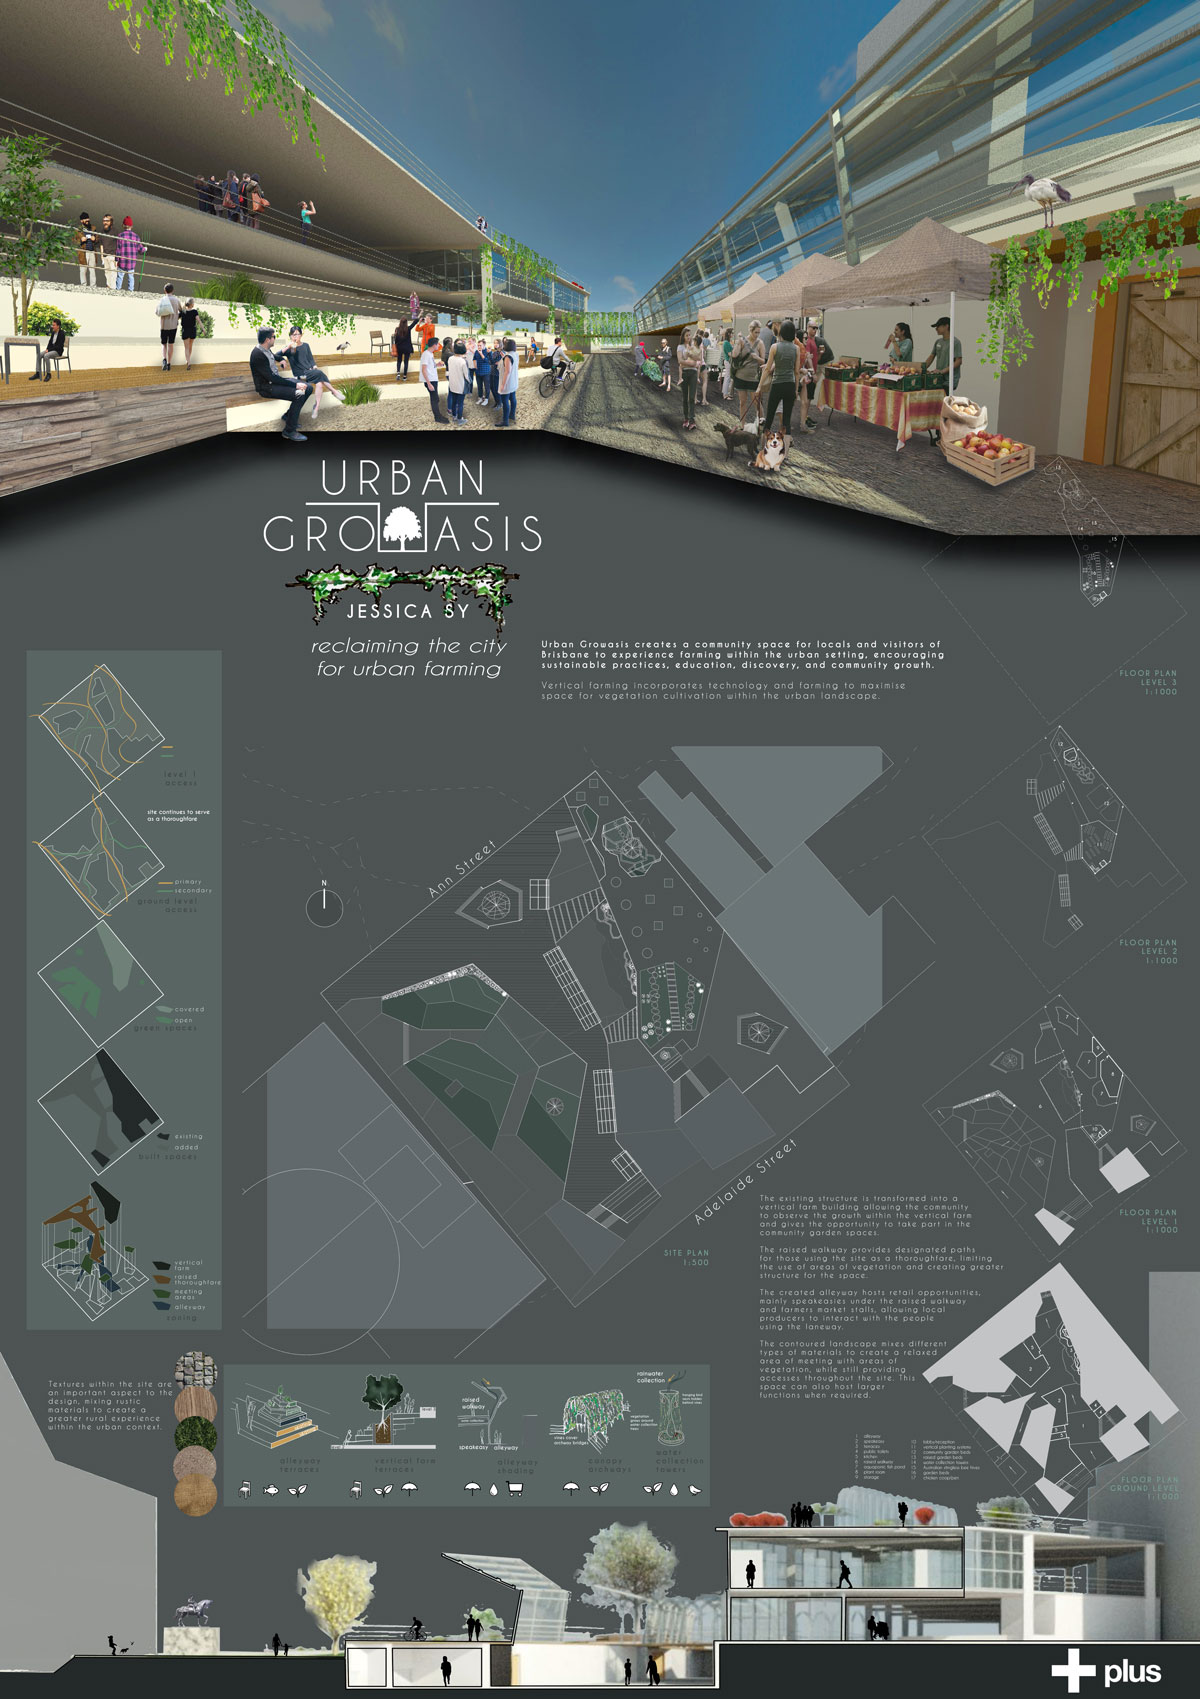 Jessica Sy's Urban Growasis design idea for King George Square